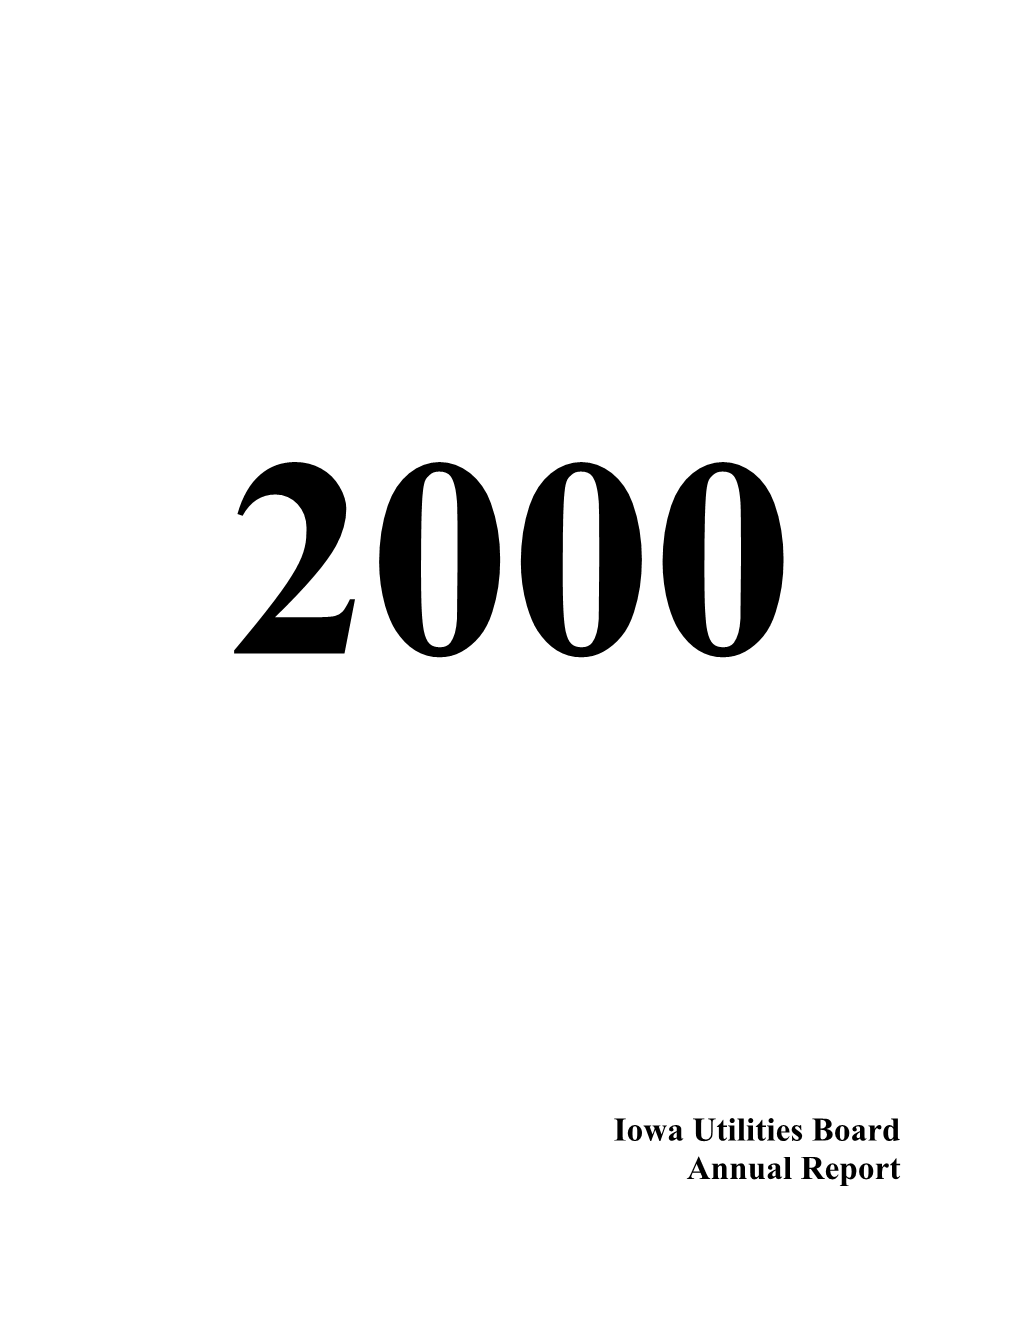 Calendar Year 2000 Annual Report of the Iowa Utilities Board